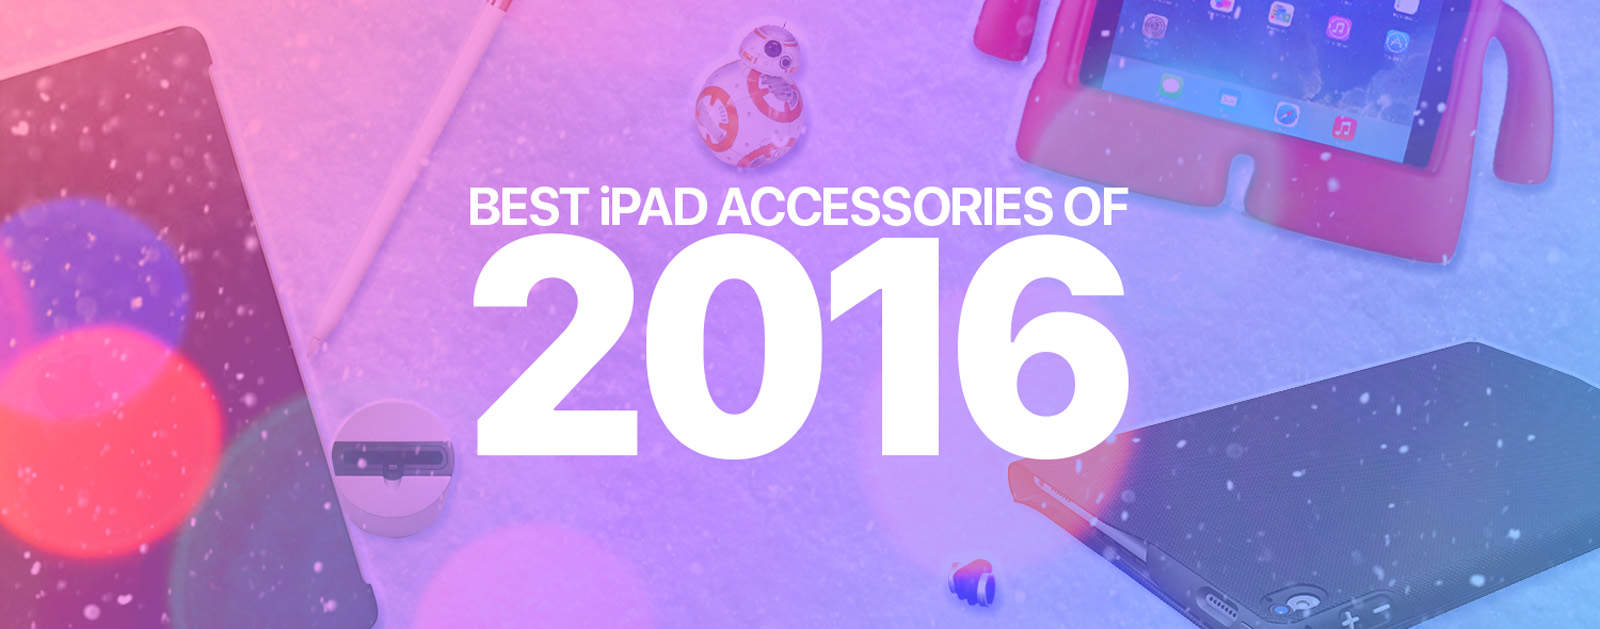 ipad_accessories